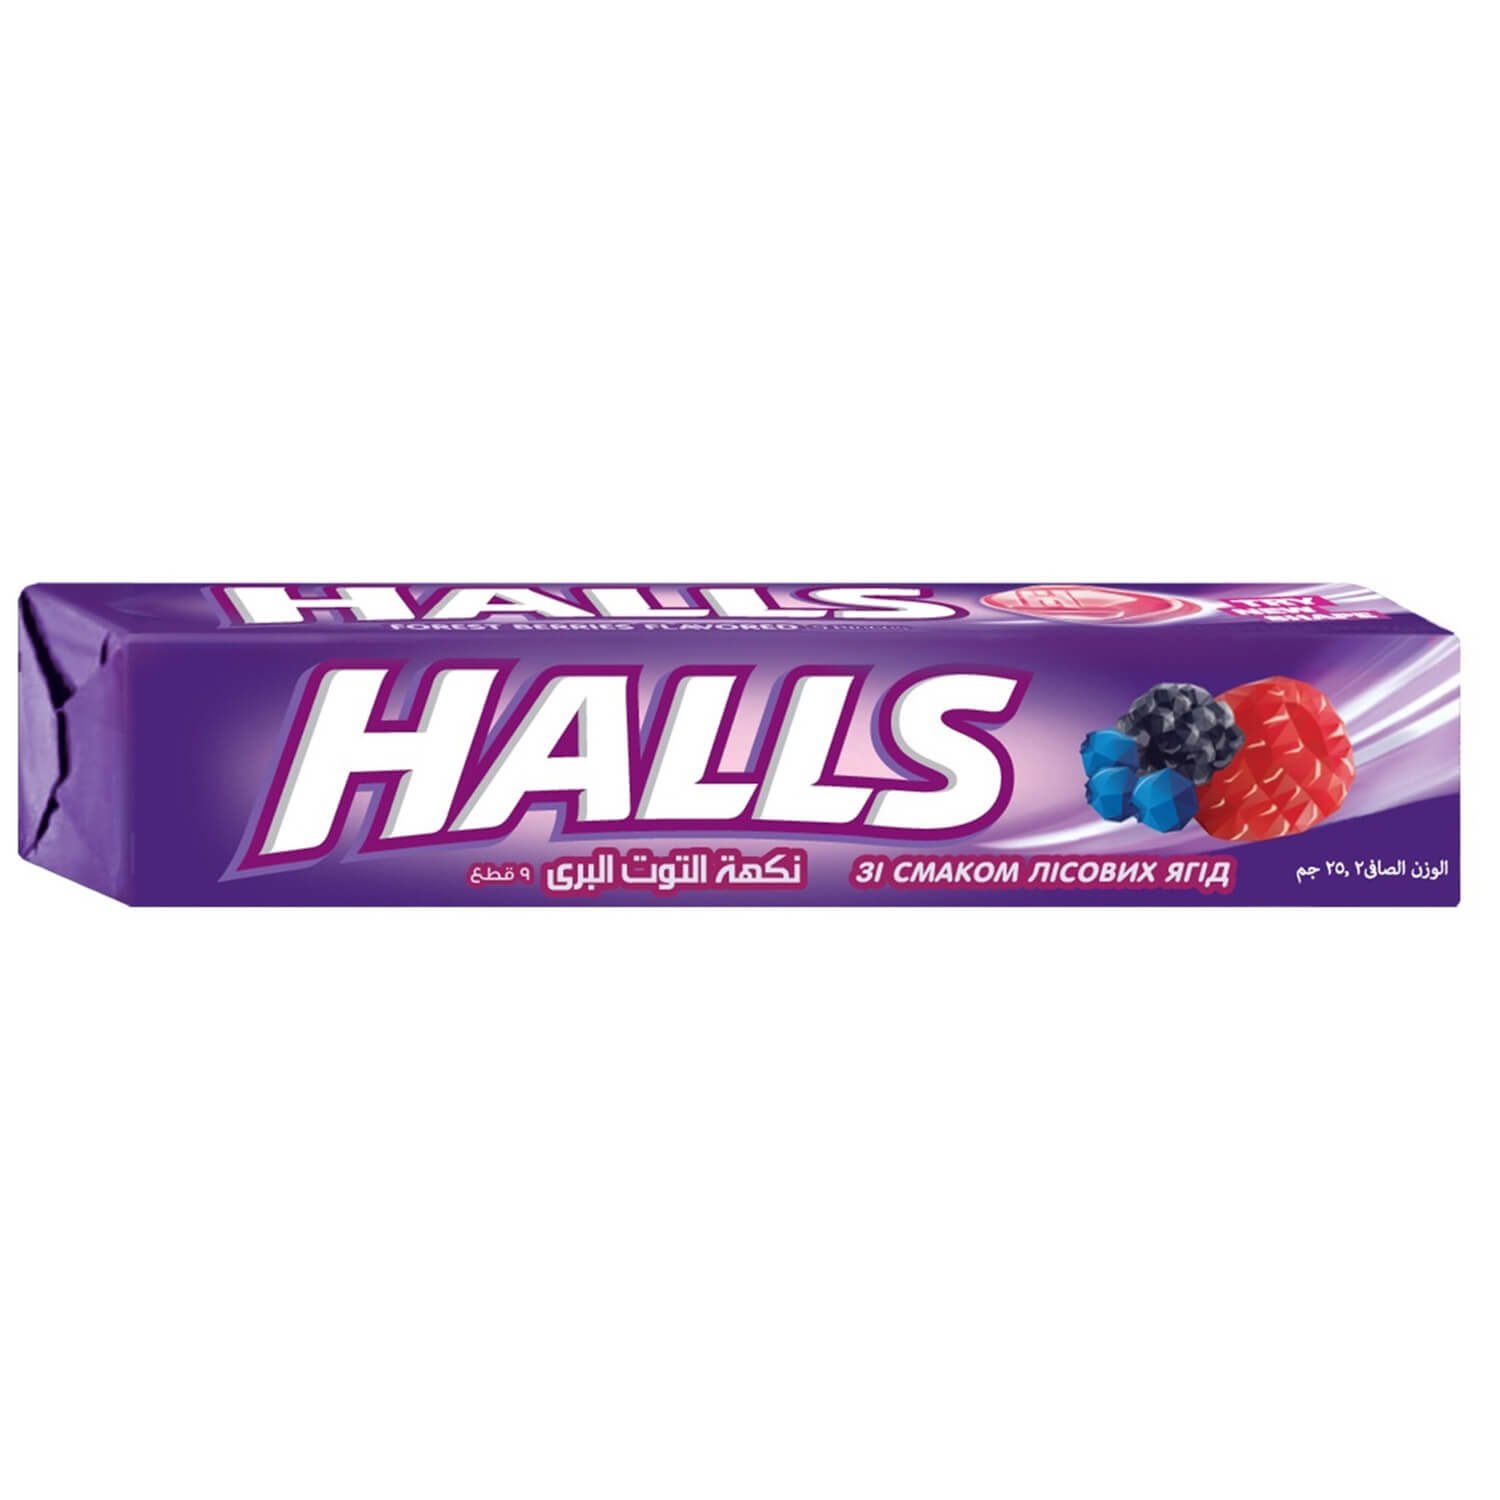 Halls вкусы. Холлс леденцы. Холлс Лесные ягоды. Карамель "Halls" 25гр. Halls со вкусом лесных ягод.